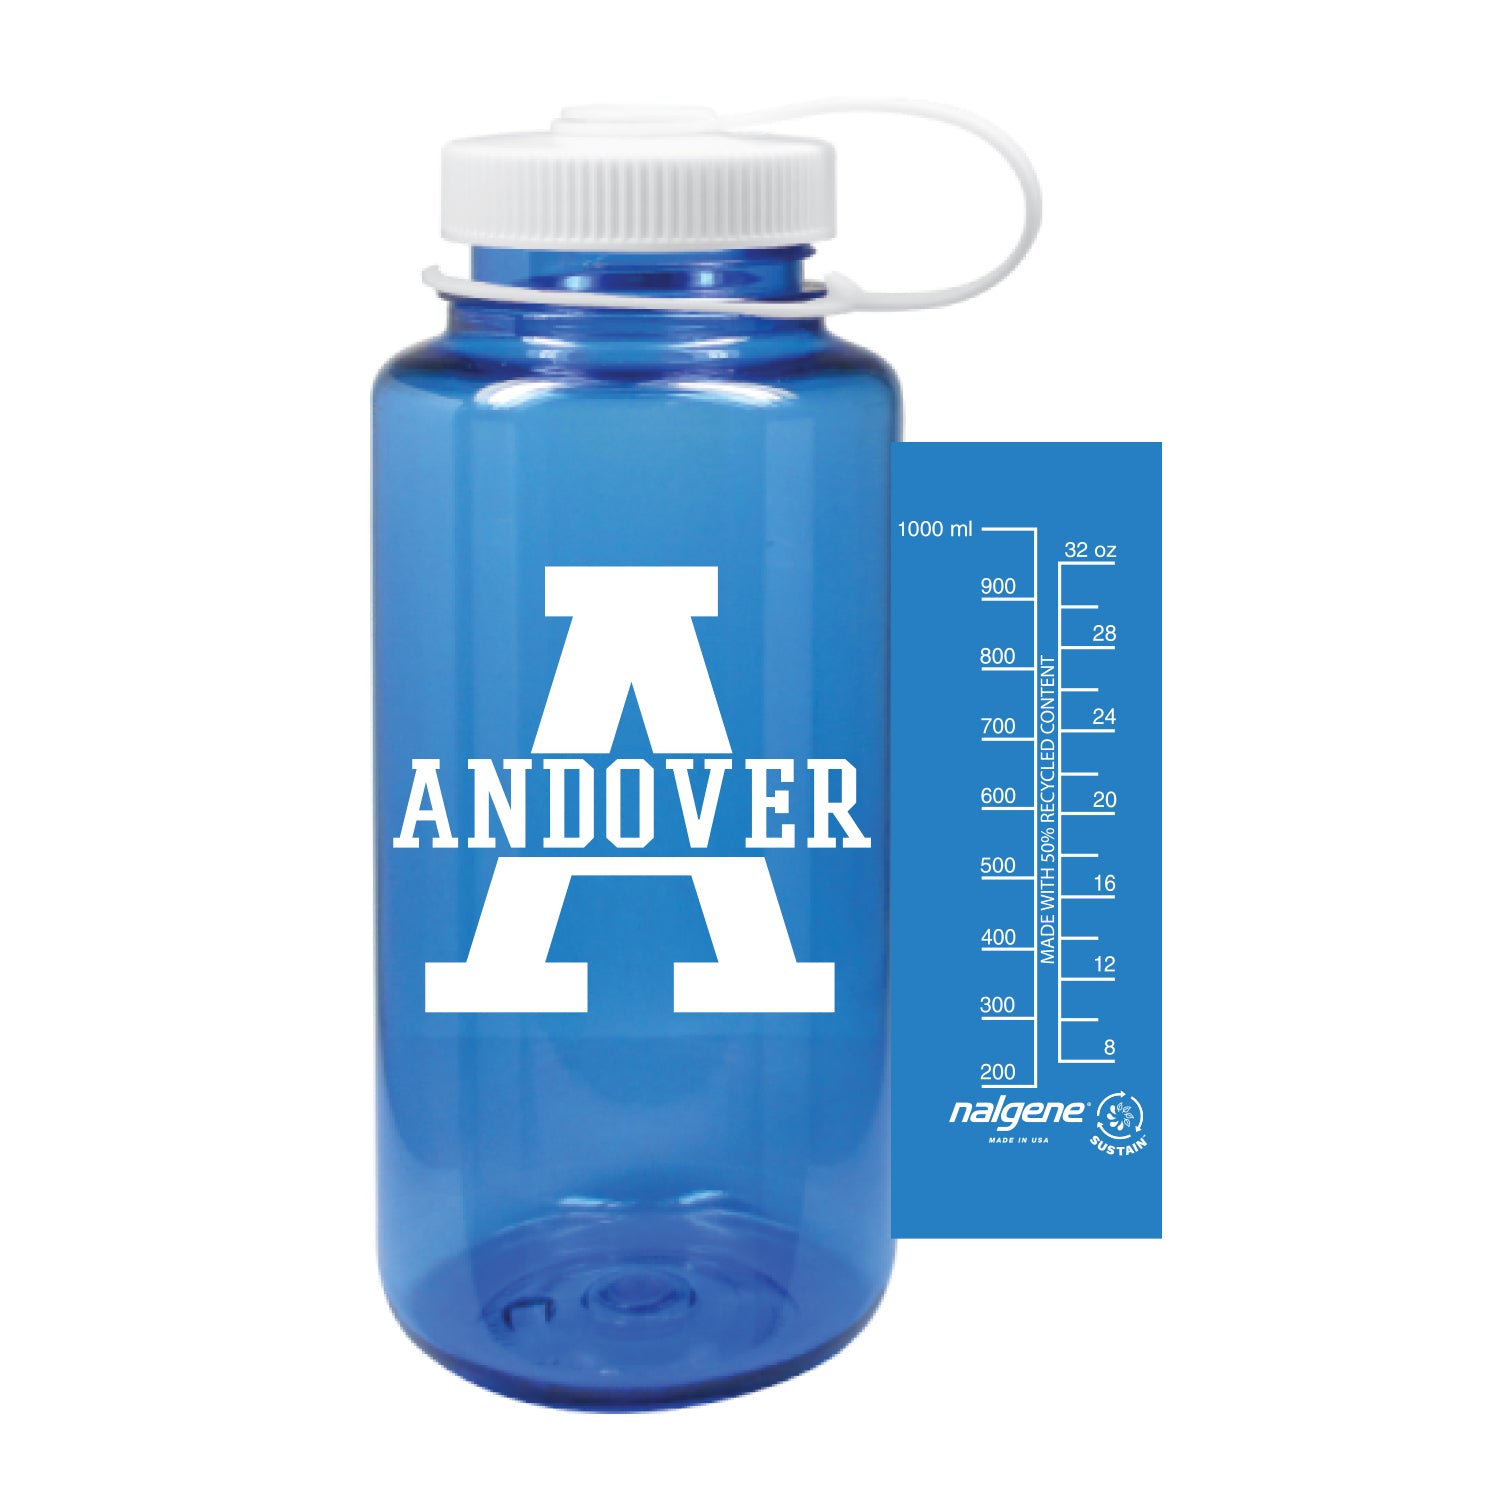 Nalgene Water Bottle – Andover Collection